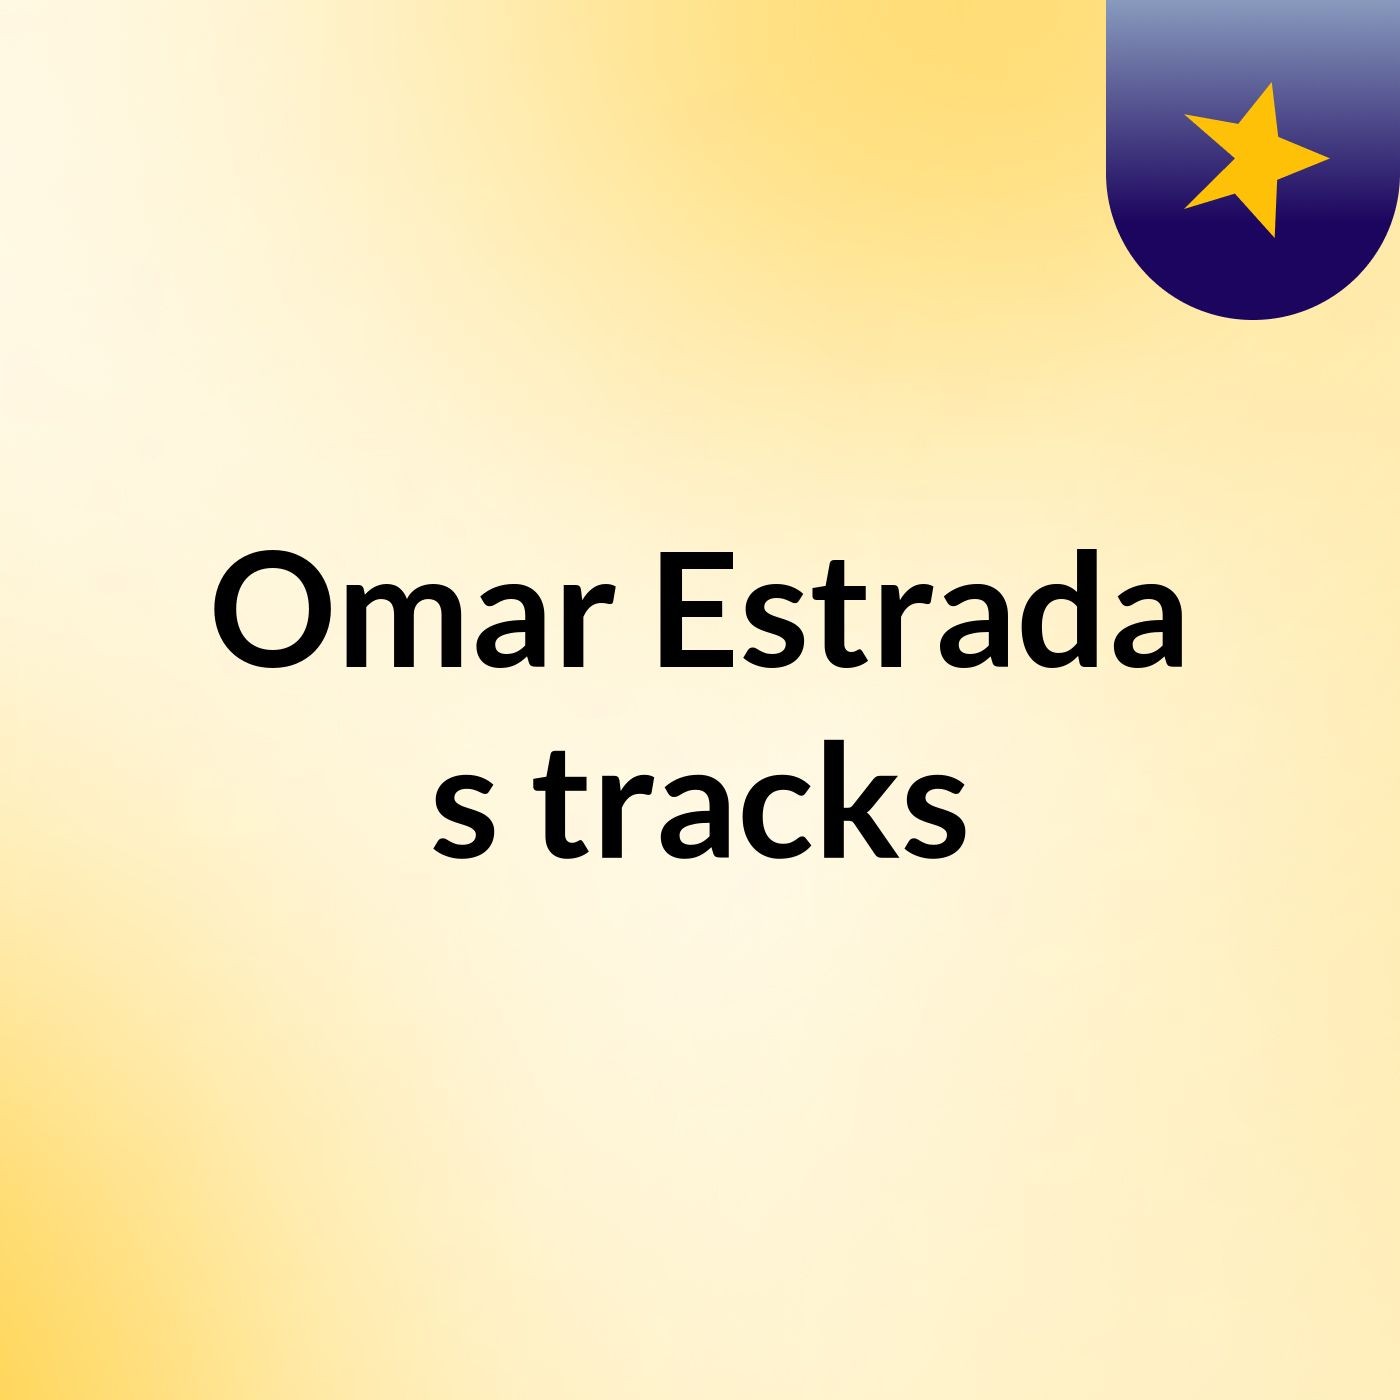 Omar Estrada's tracks